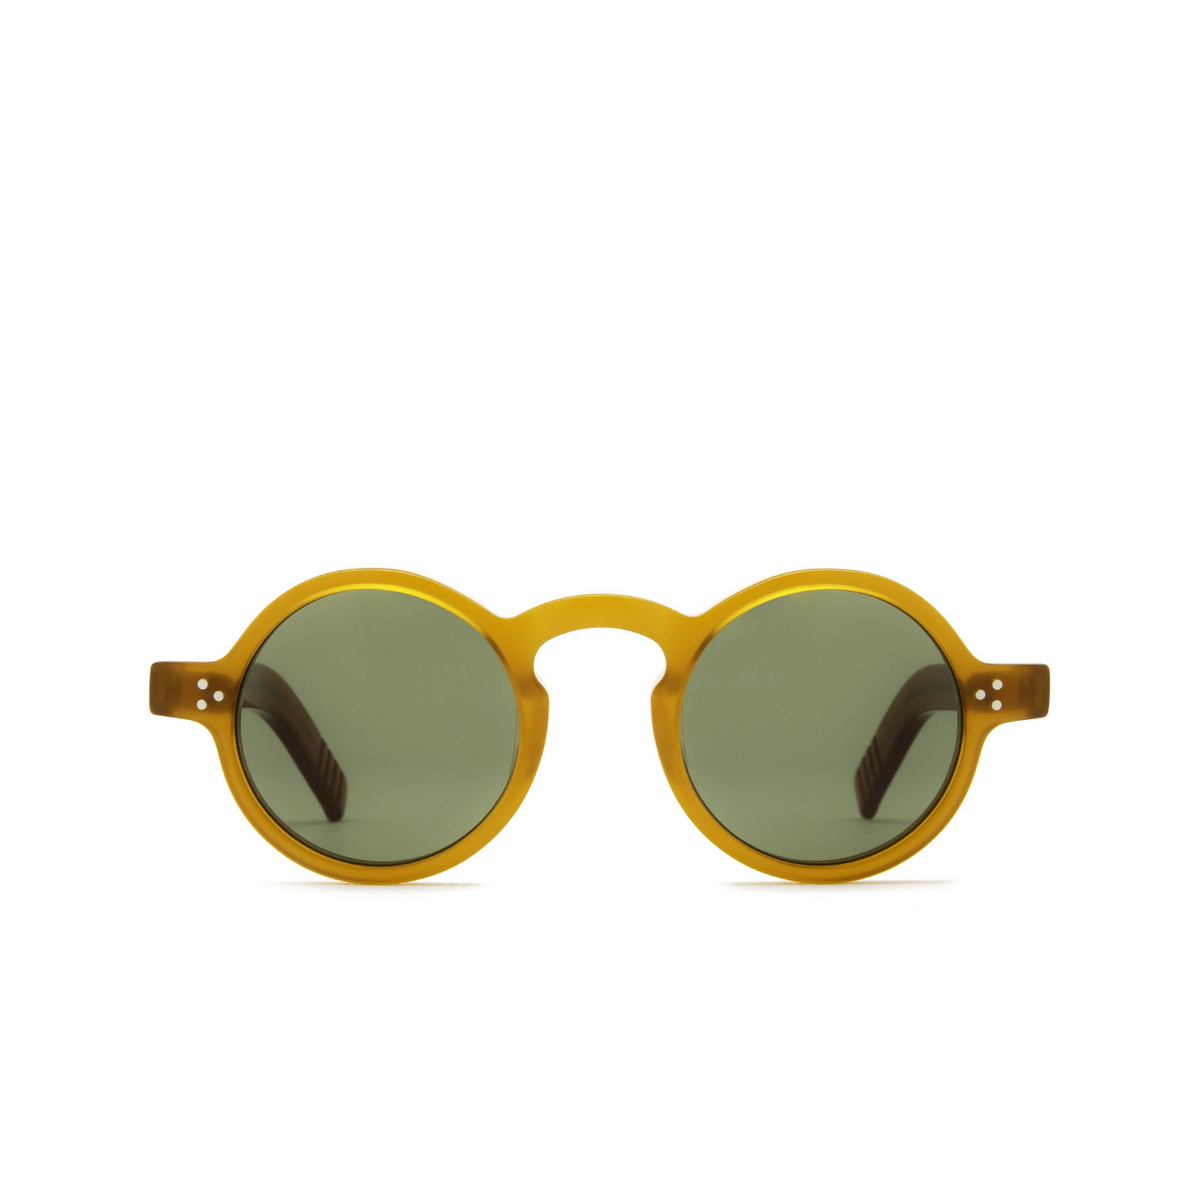 Lesca® Round Sunglasses: S.freud color Honey 1 - front view.